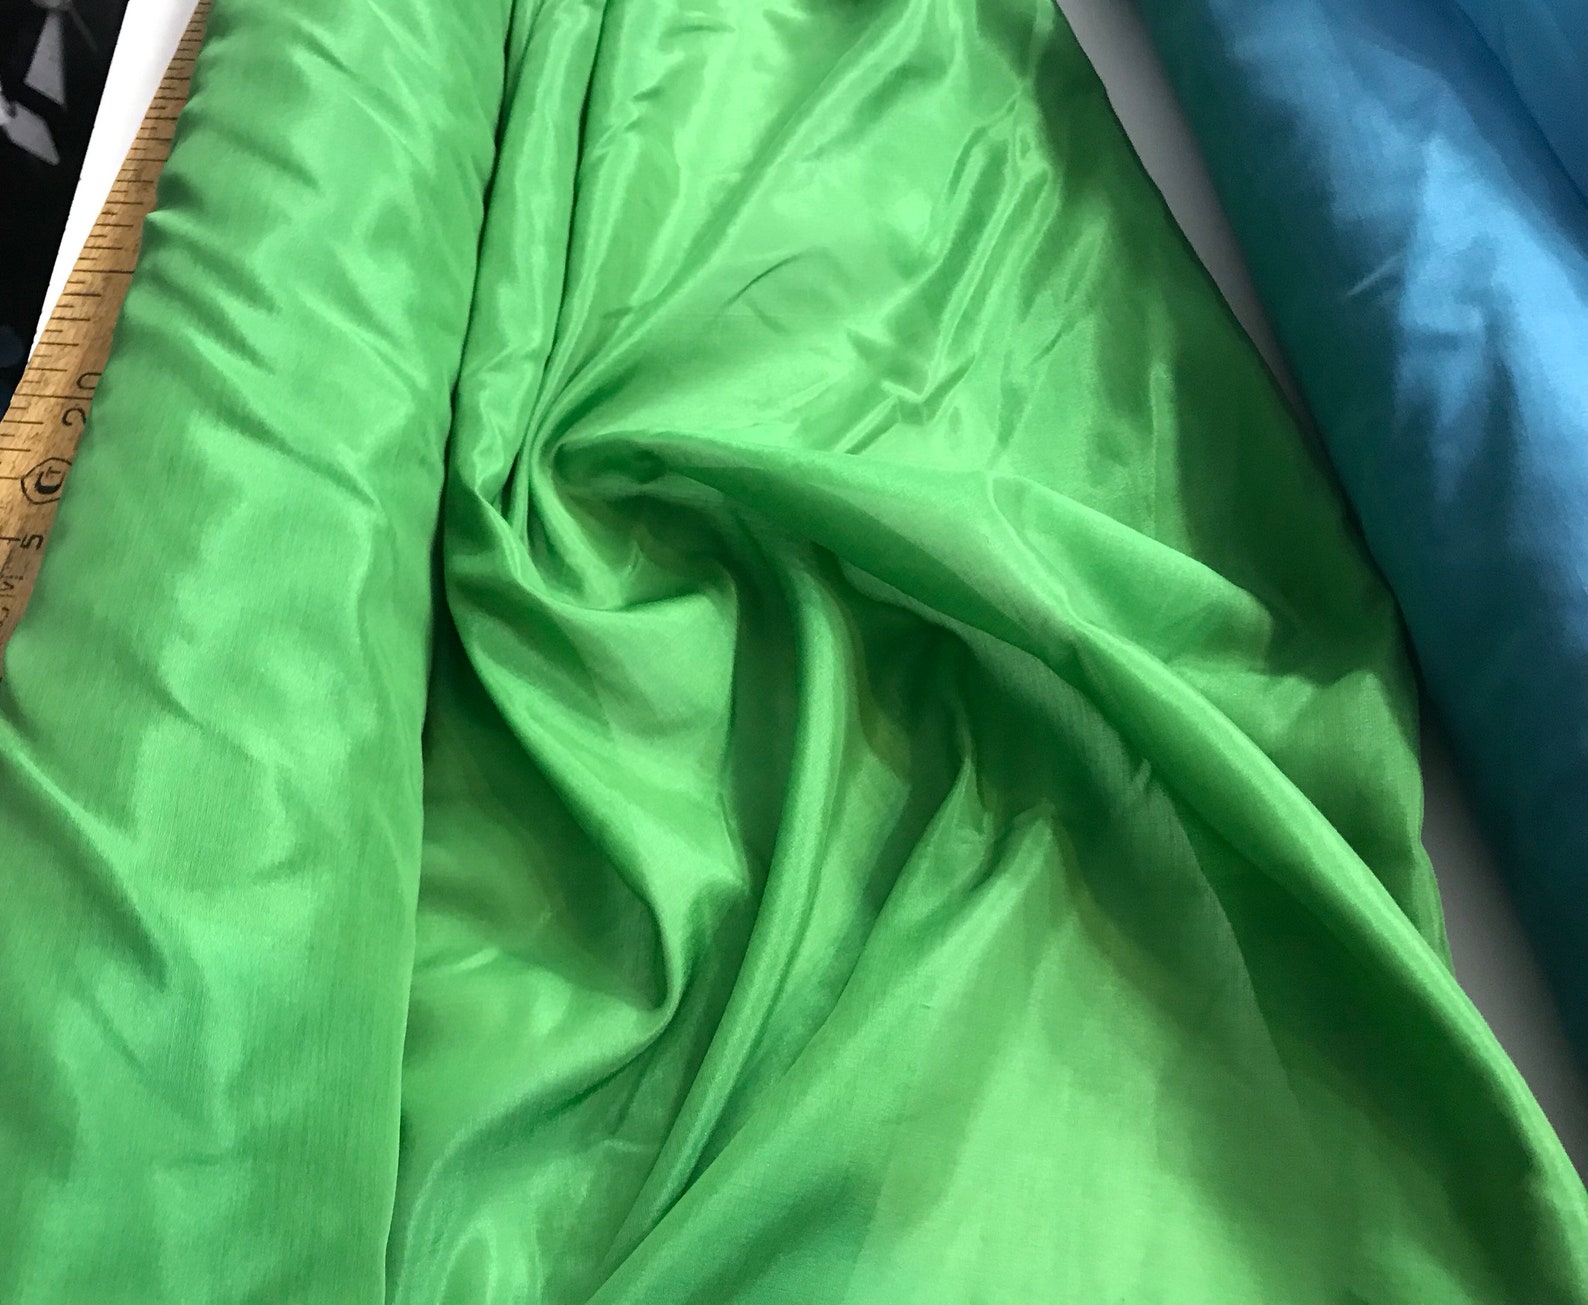 Silk batiste fabric. Mulberry silk fabric. Lining fabric | Etsy